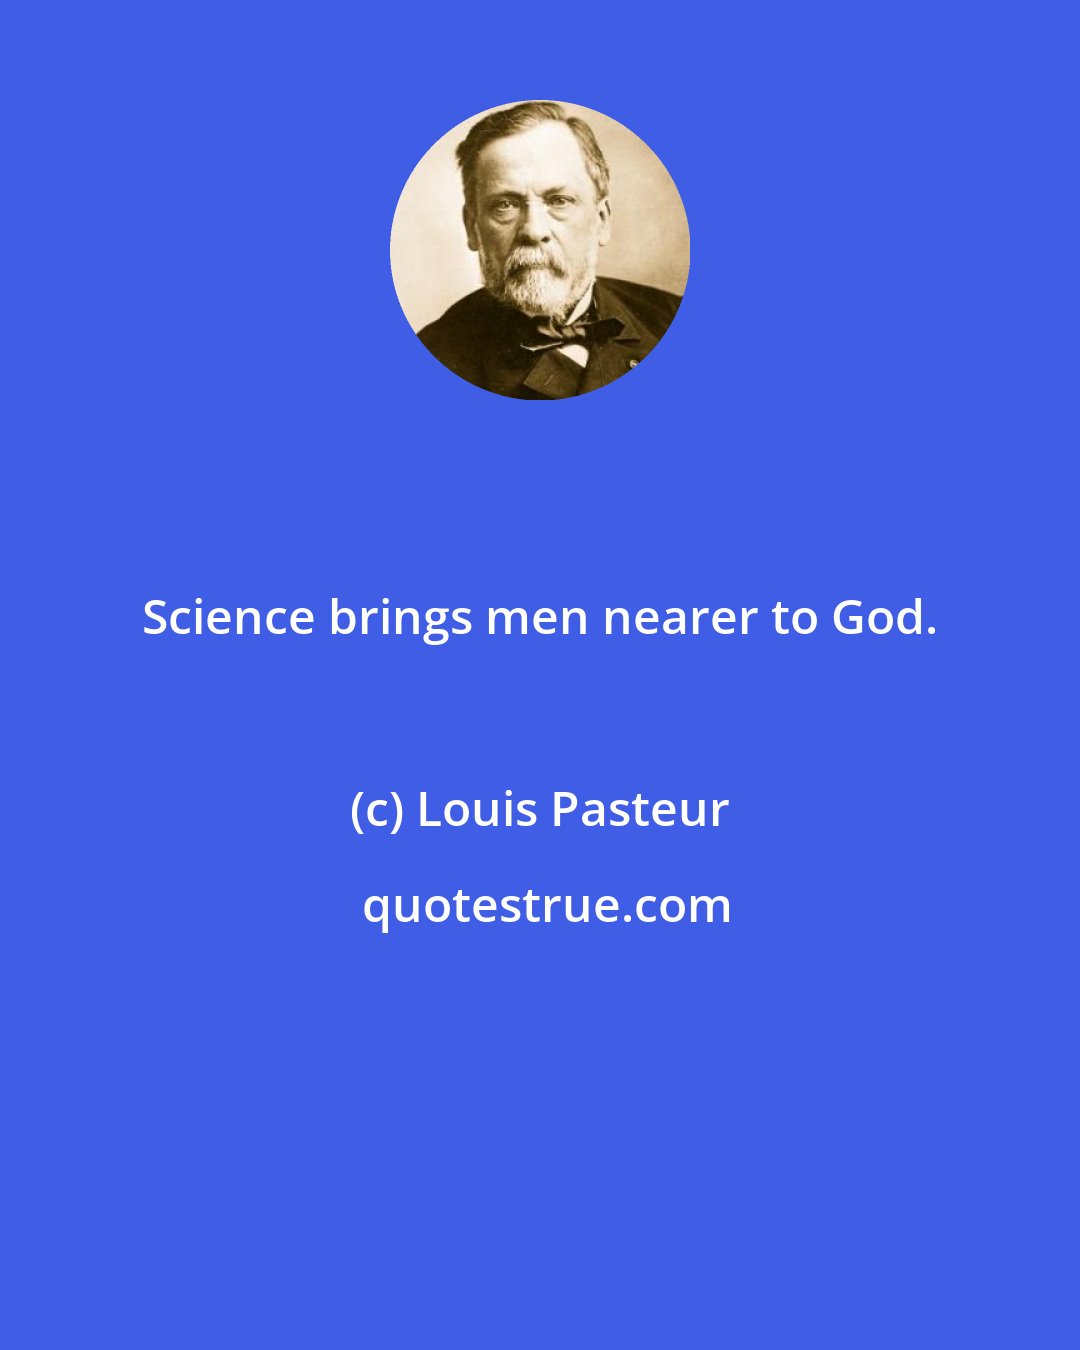 Louis Pasteur: Science brings men nearer to God.